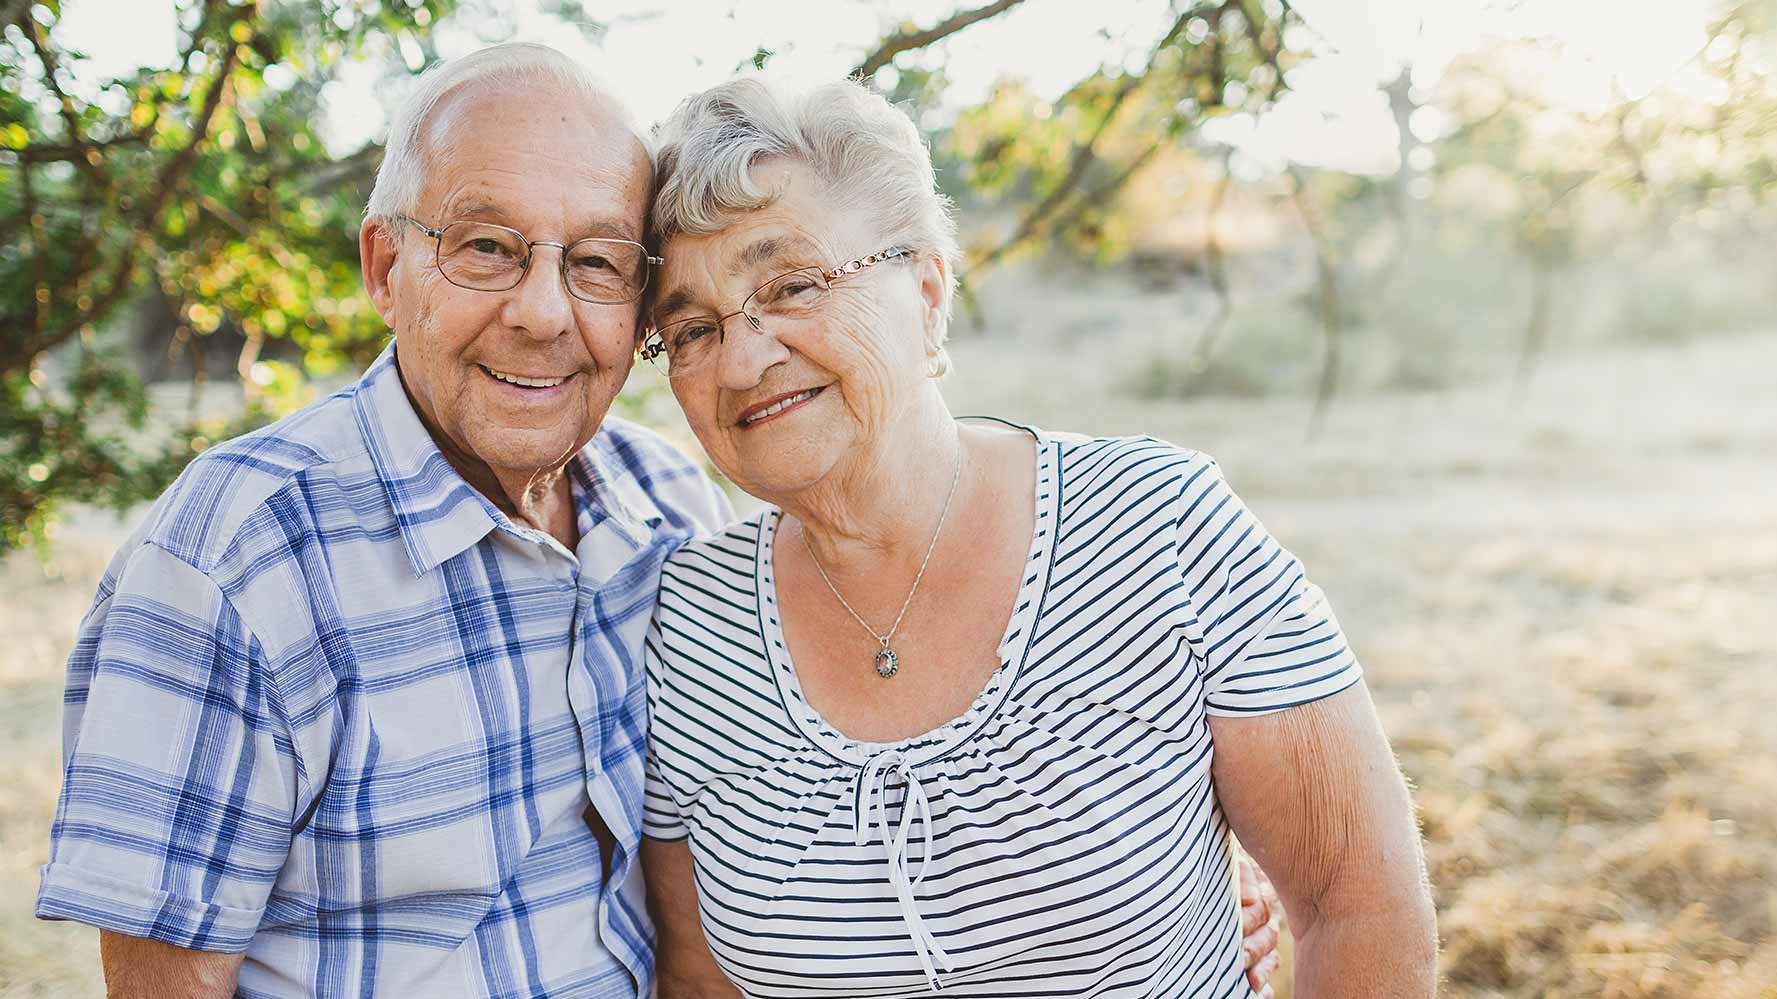 Older couple posing together